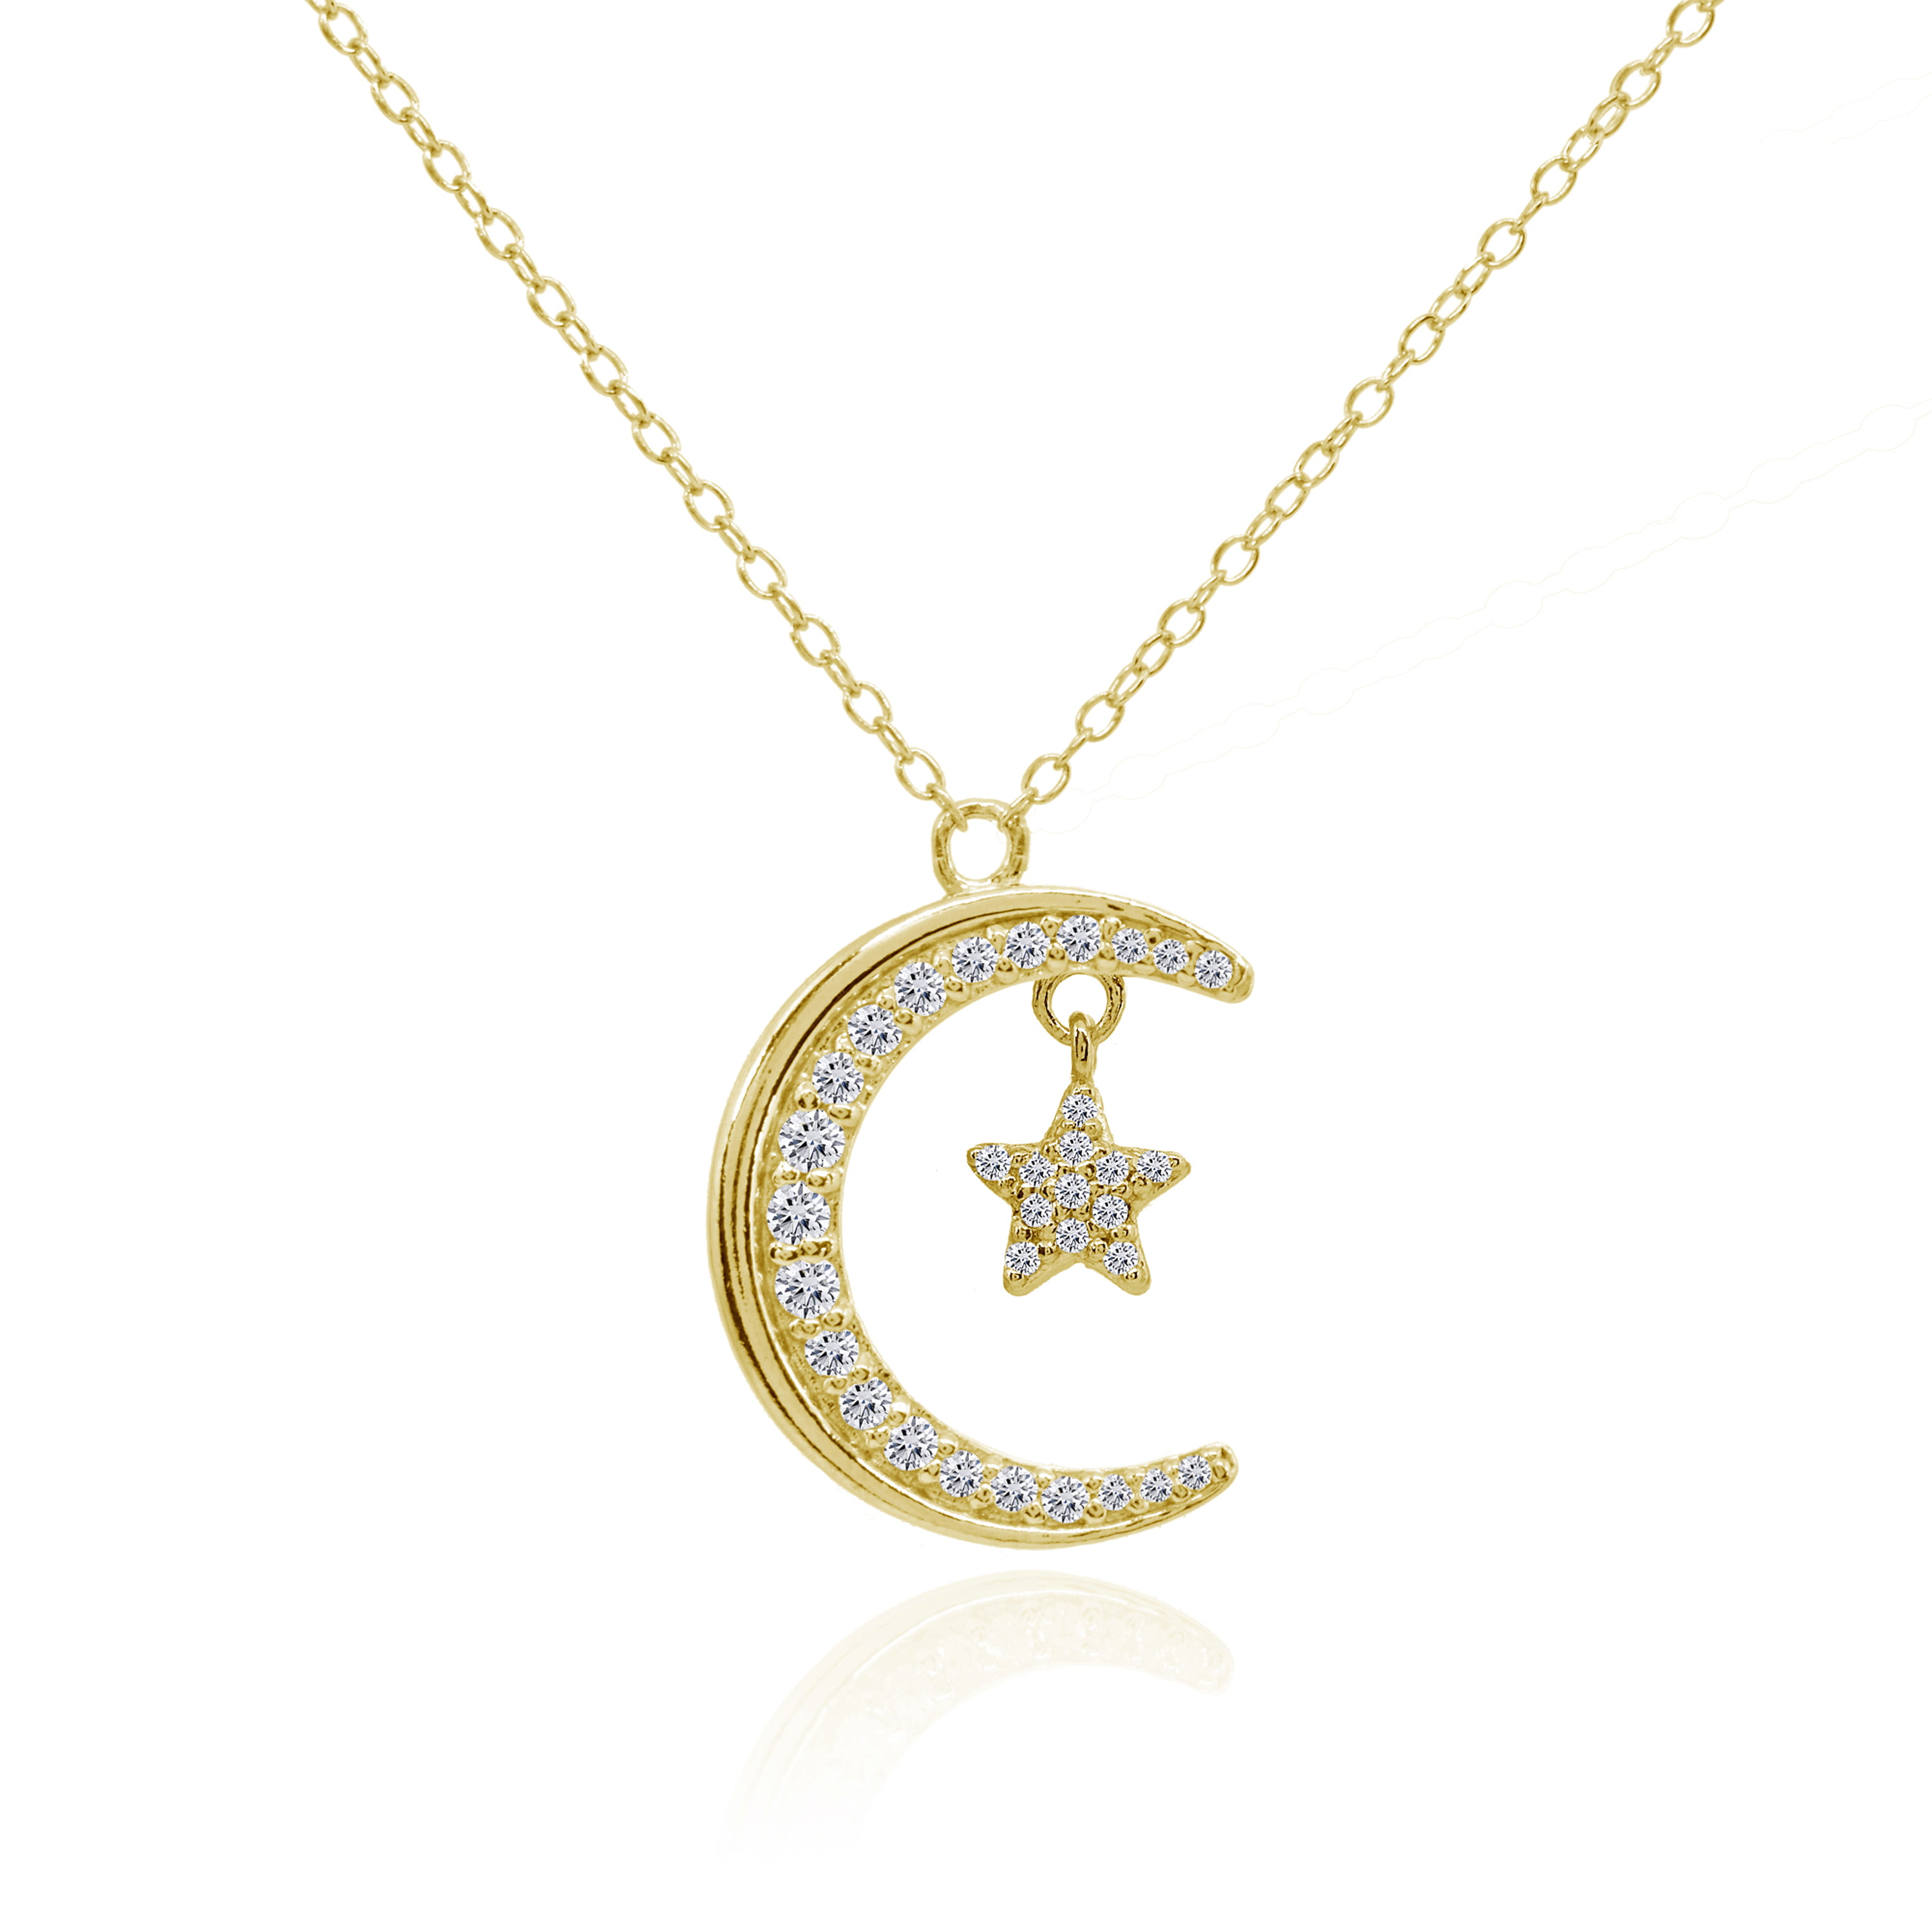 Fashion Women Delicate Jewelry Star Crescent Moon Necklace Pendant Charm Chain 